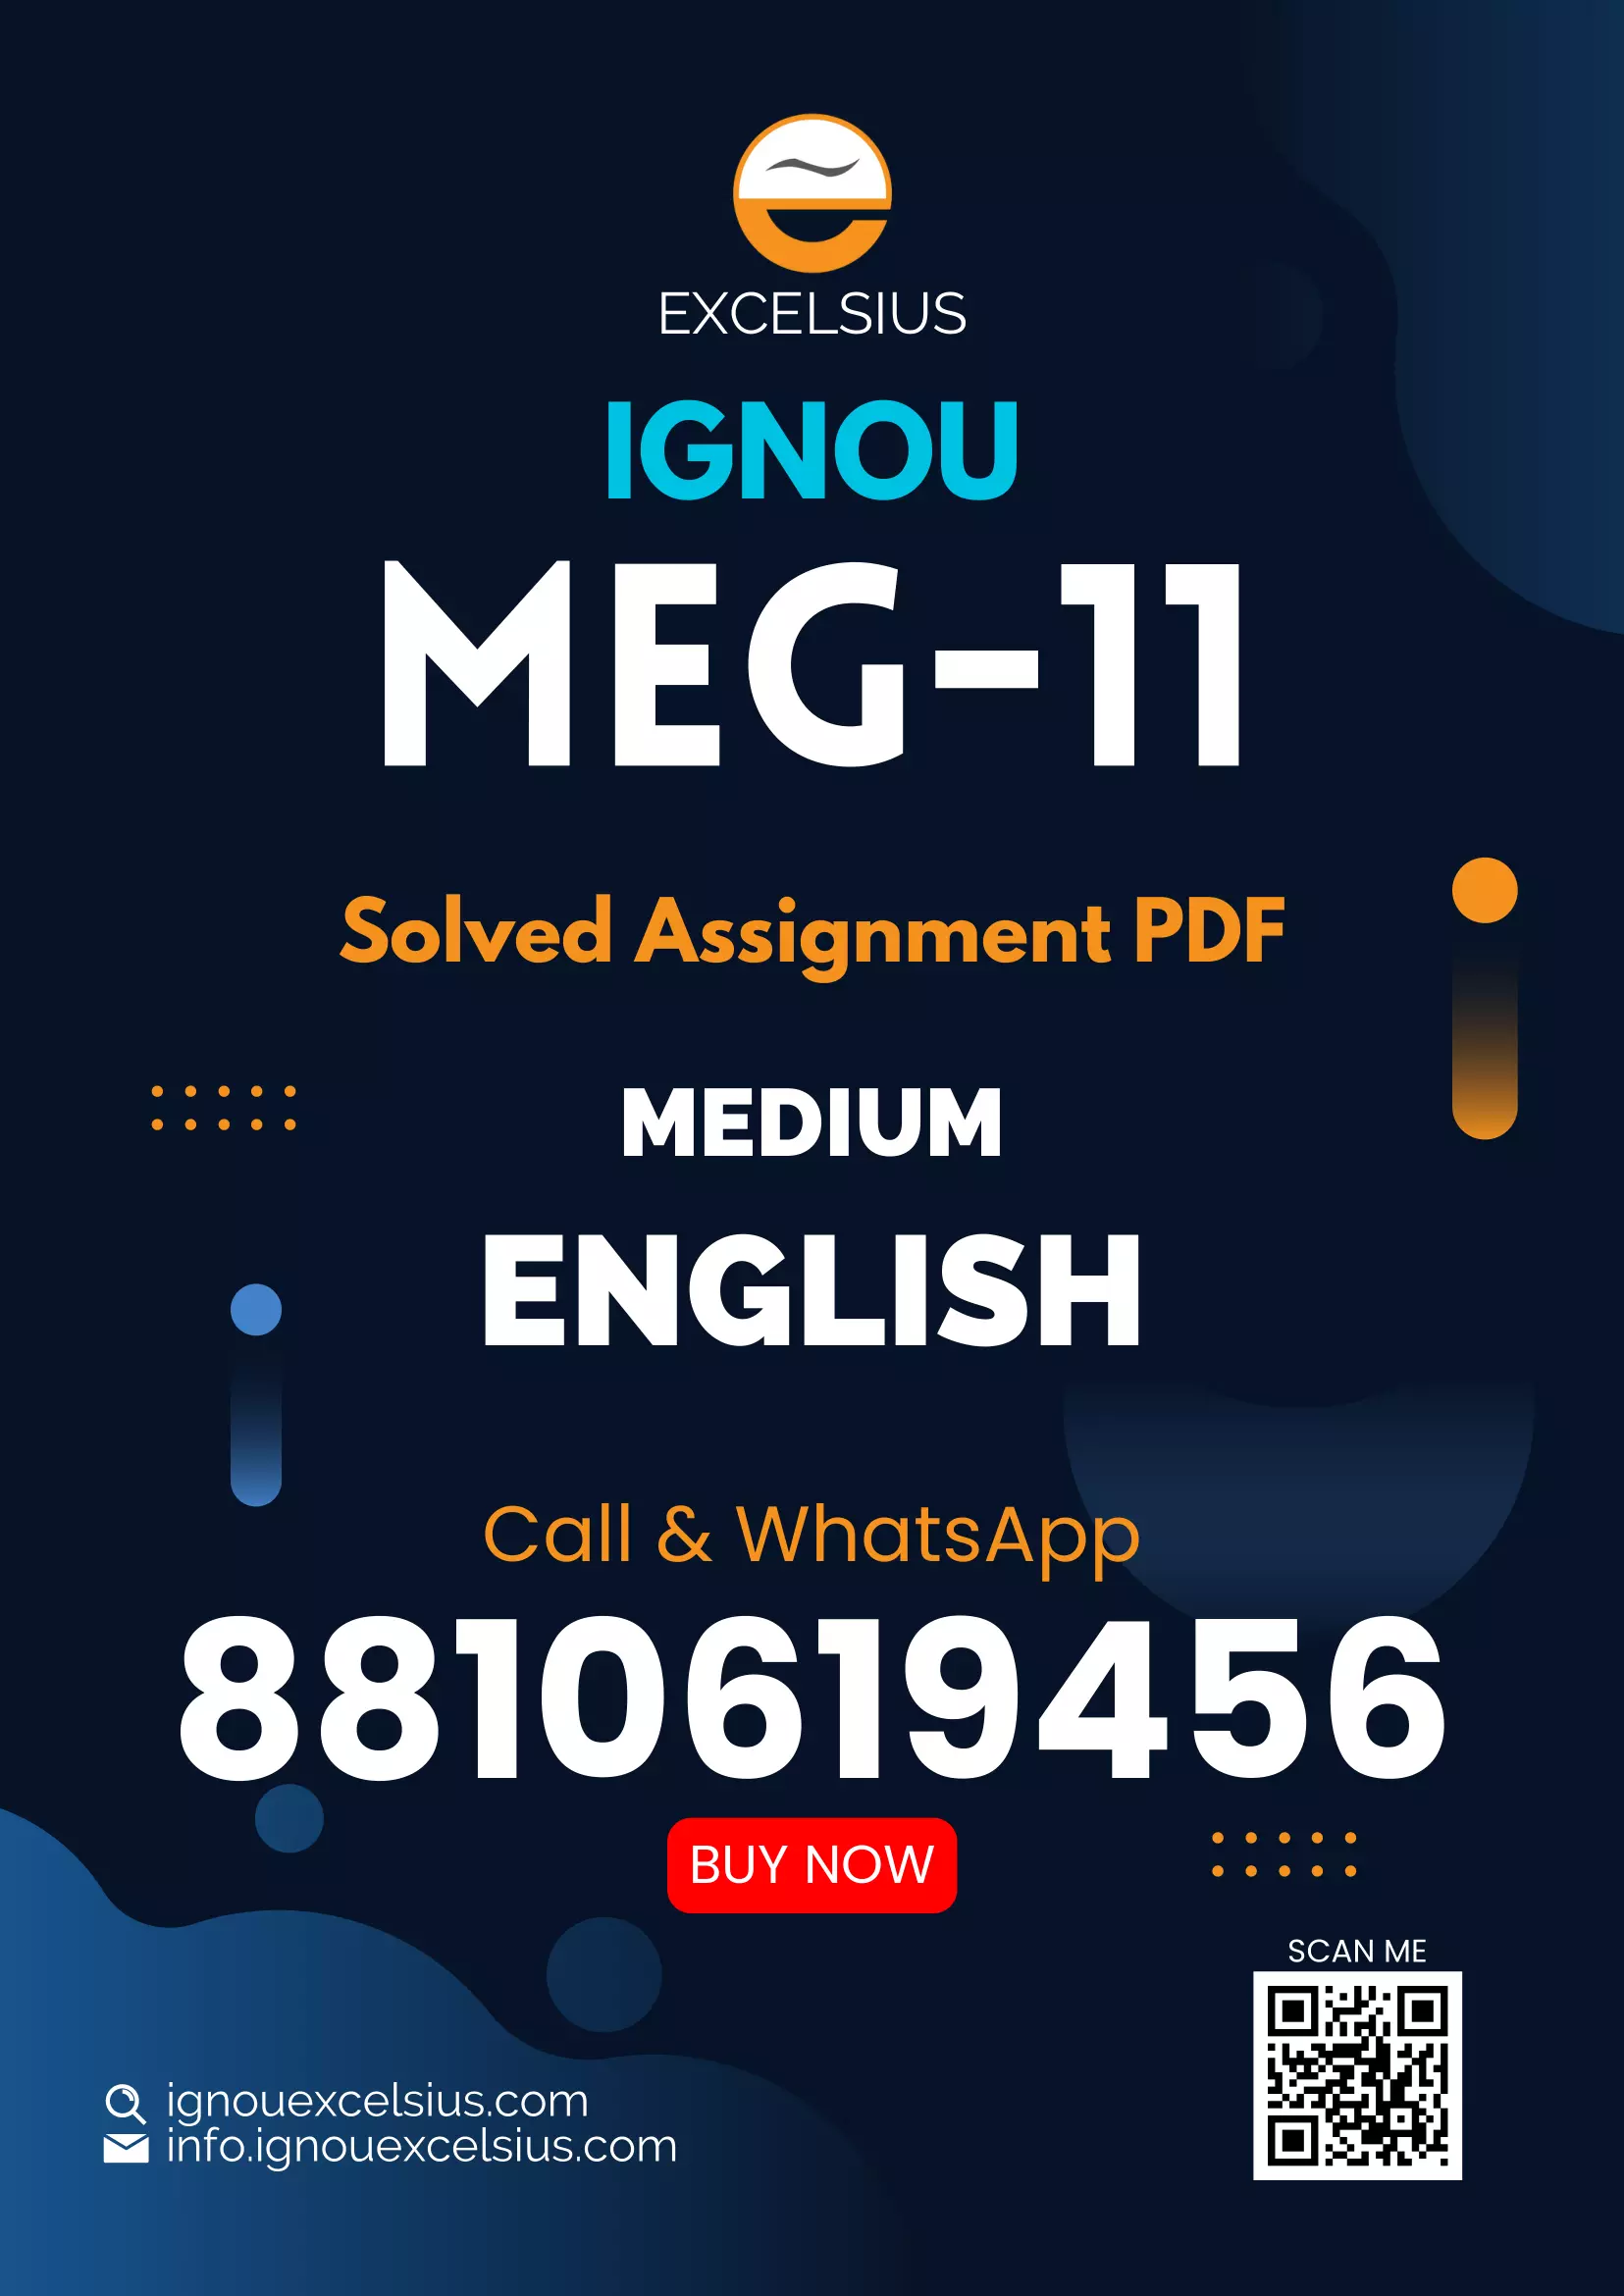 IGNOU MEG-11 - American Novel Latest Solved Assignment-July 2023 – January 2024